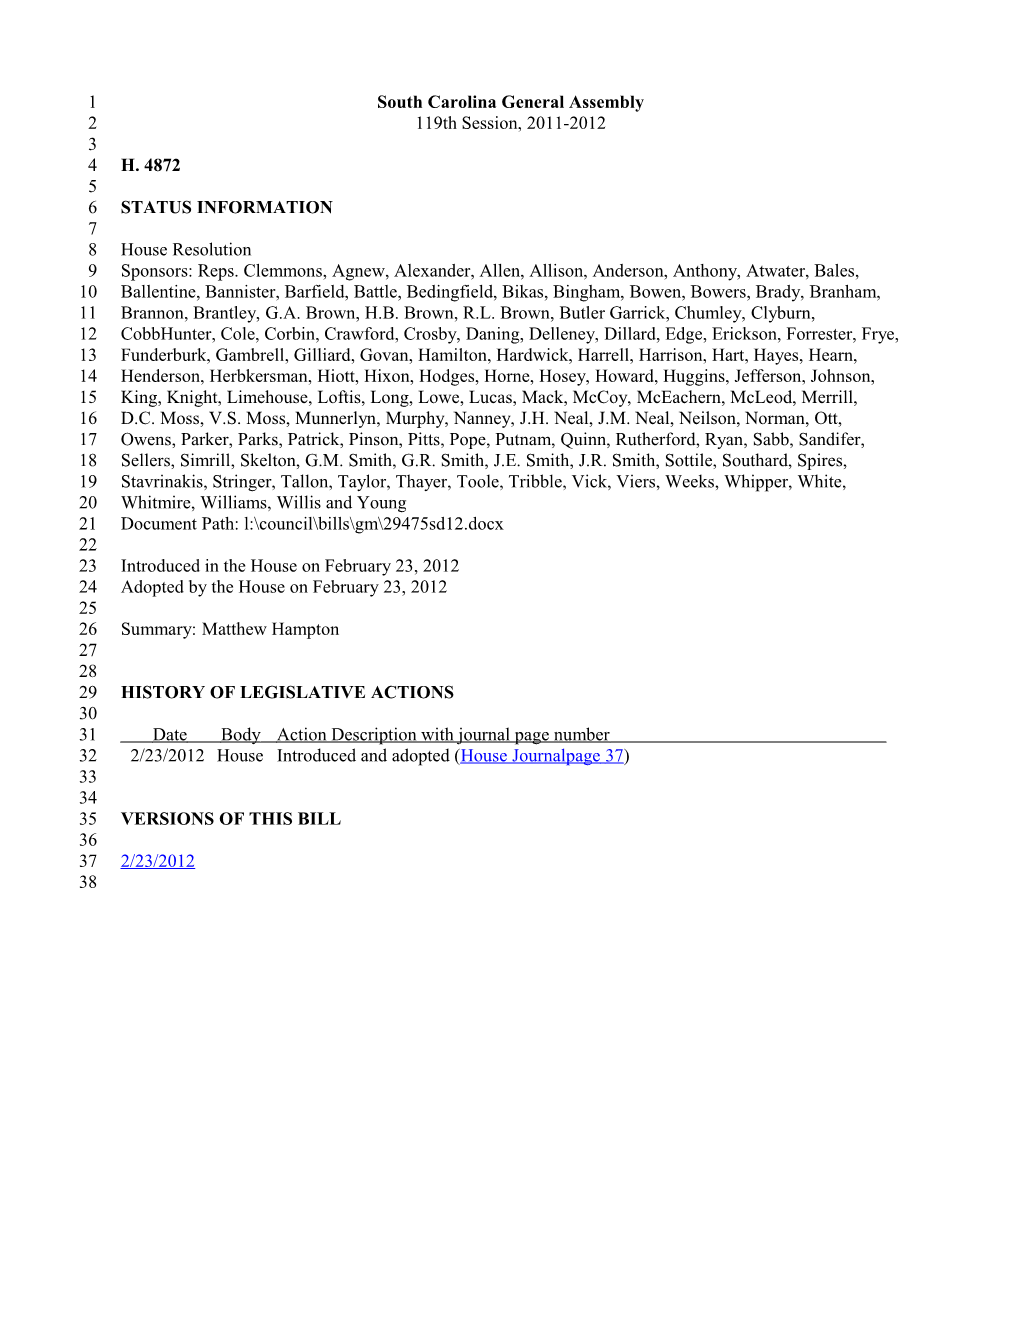 2011-2012 Bill 4872: Matthew Hampton - South Carolina Legislature Online